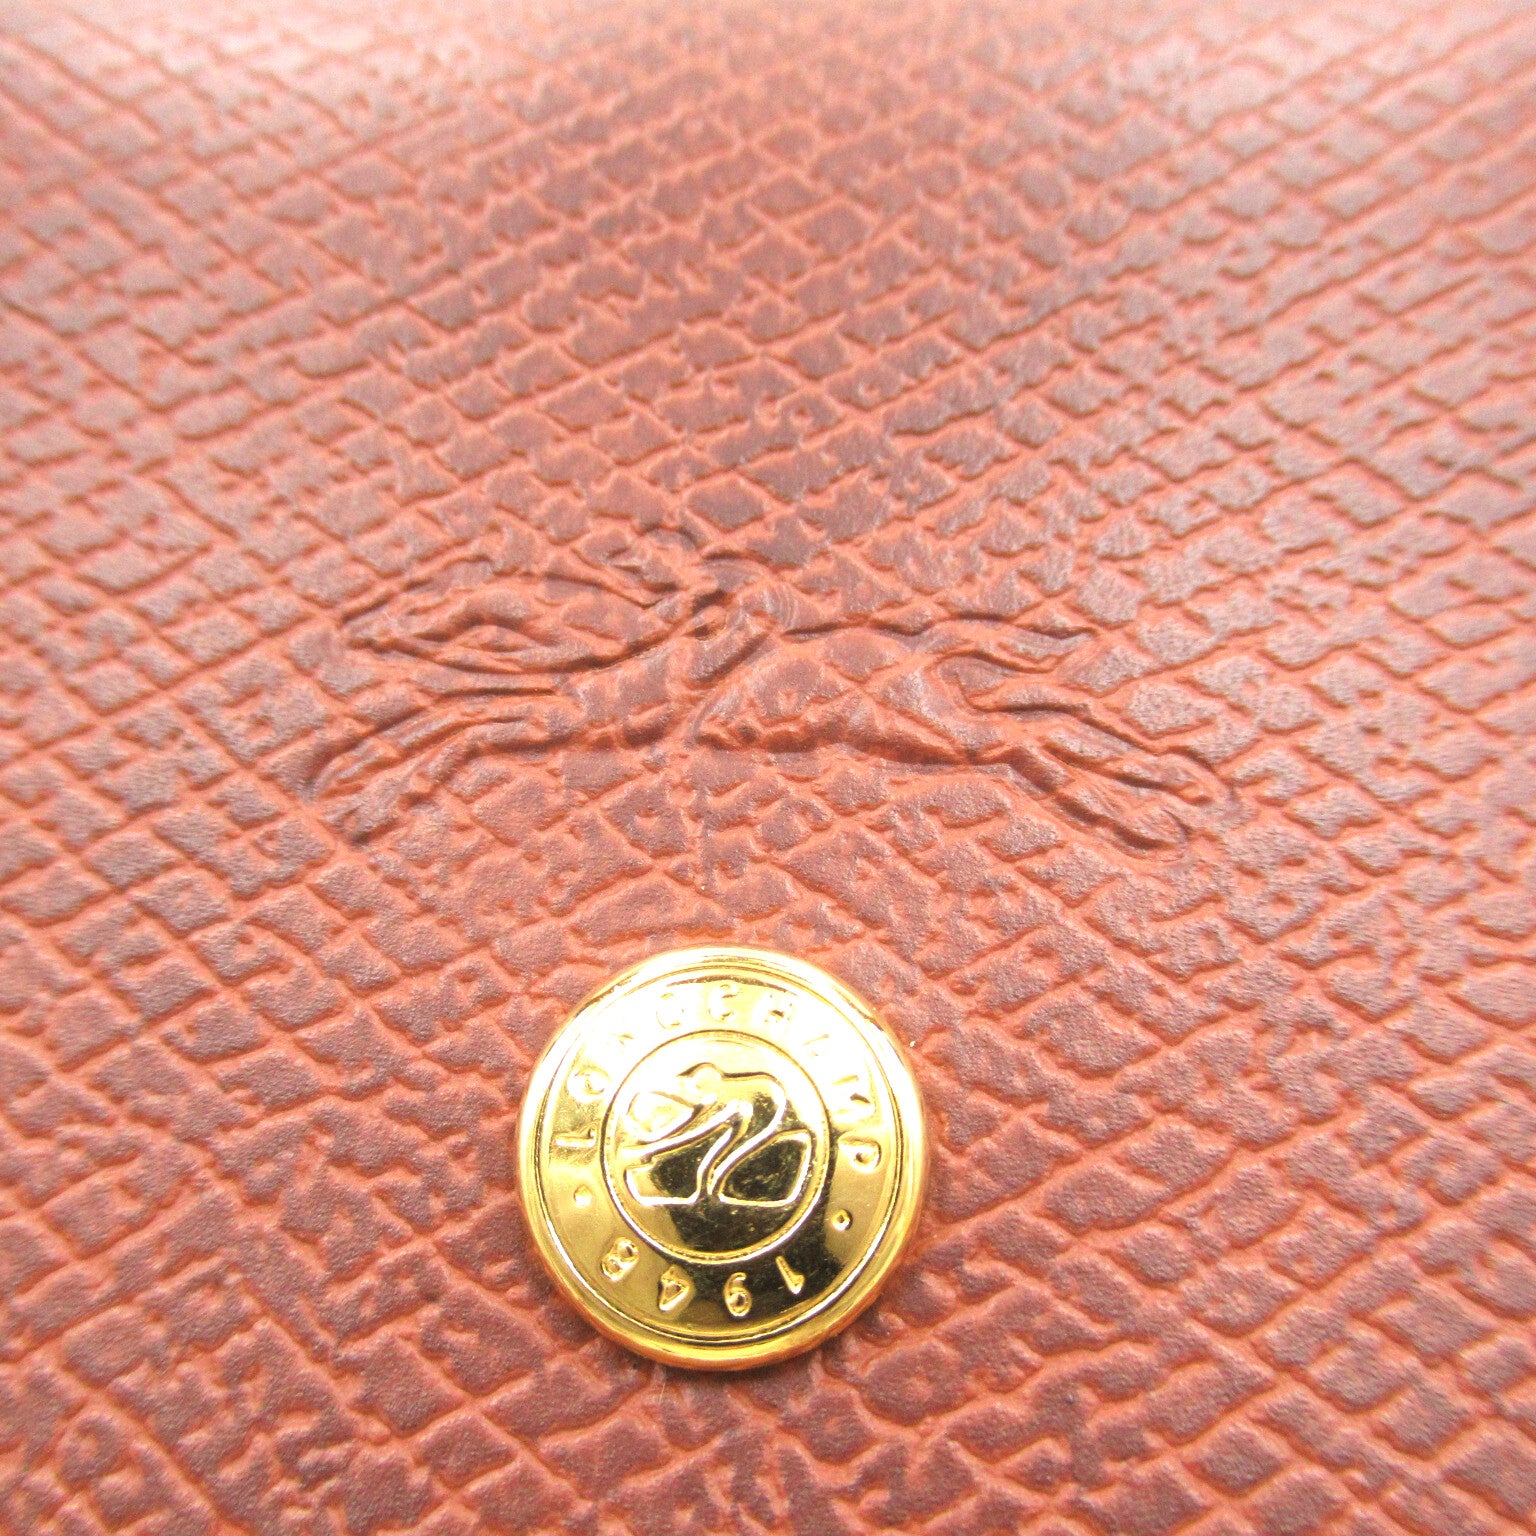 Longchamp Longchamp Original M Top Handle Bag Bag Polyamide Recycled Polyamide  Green Seal L1623089P84